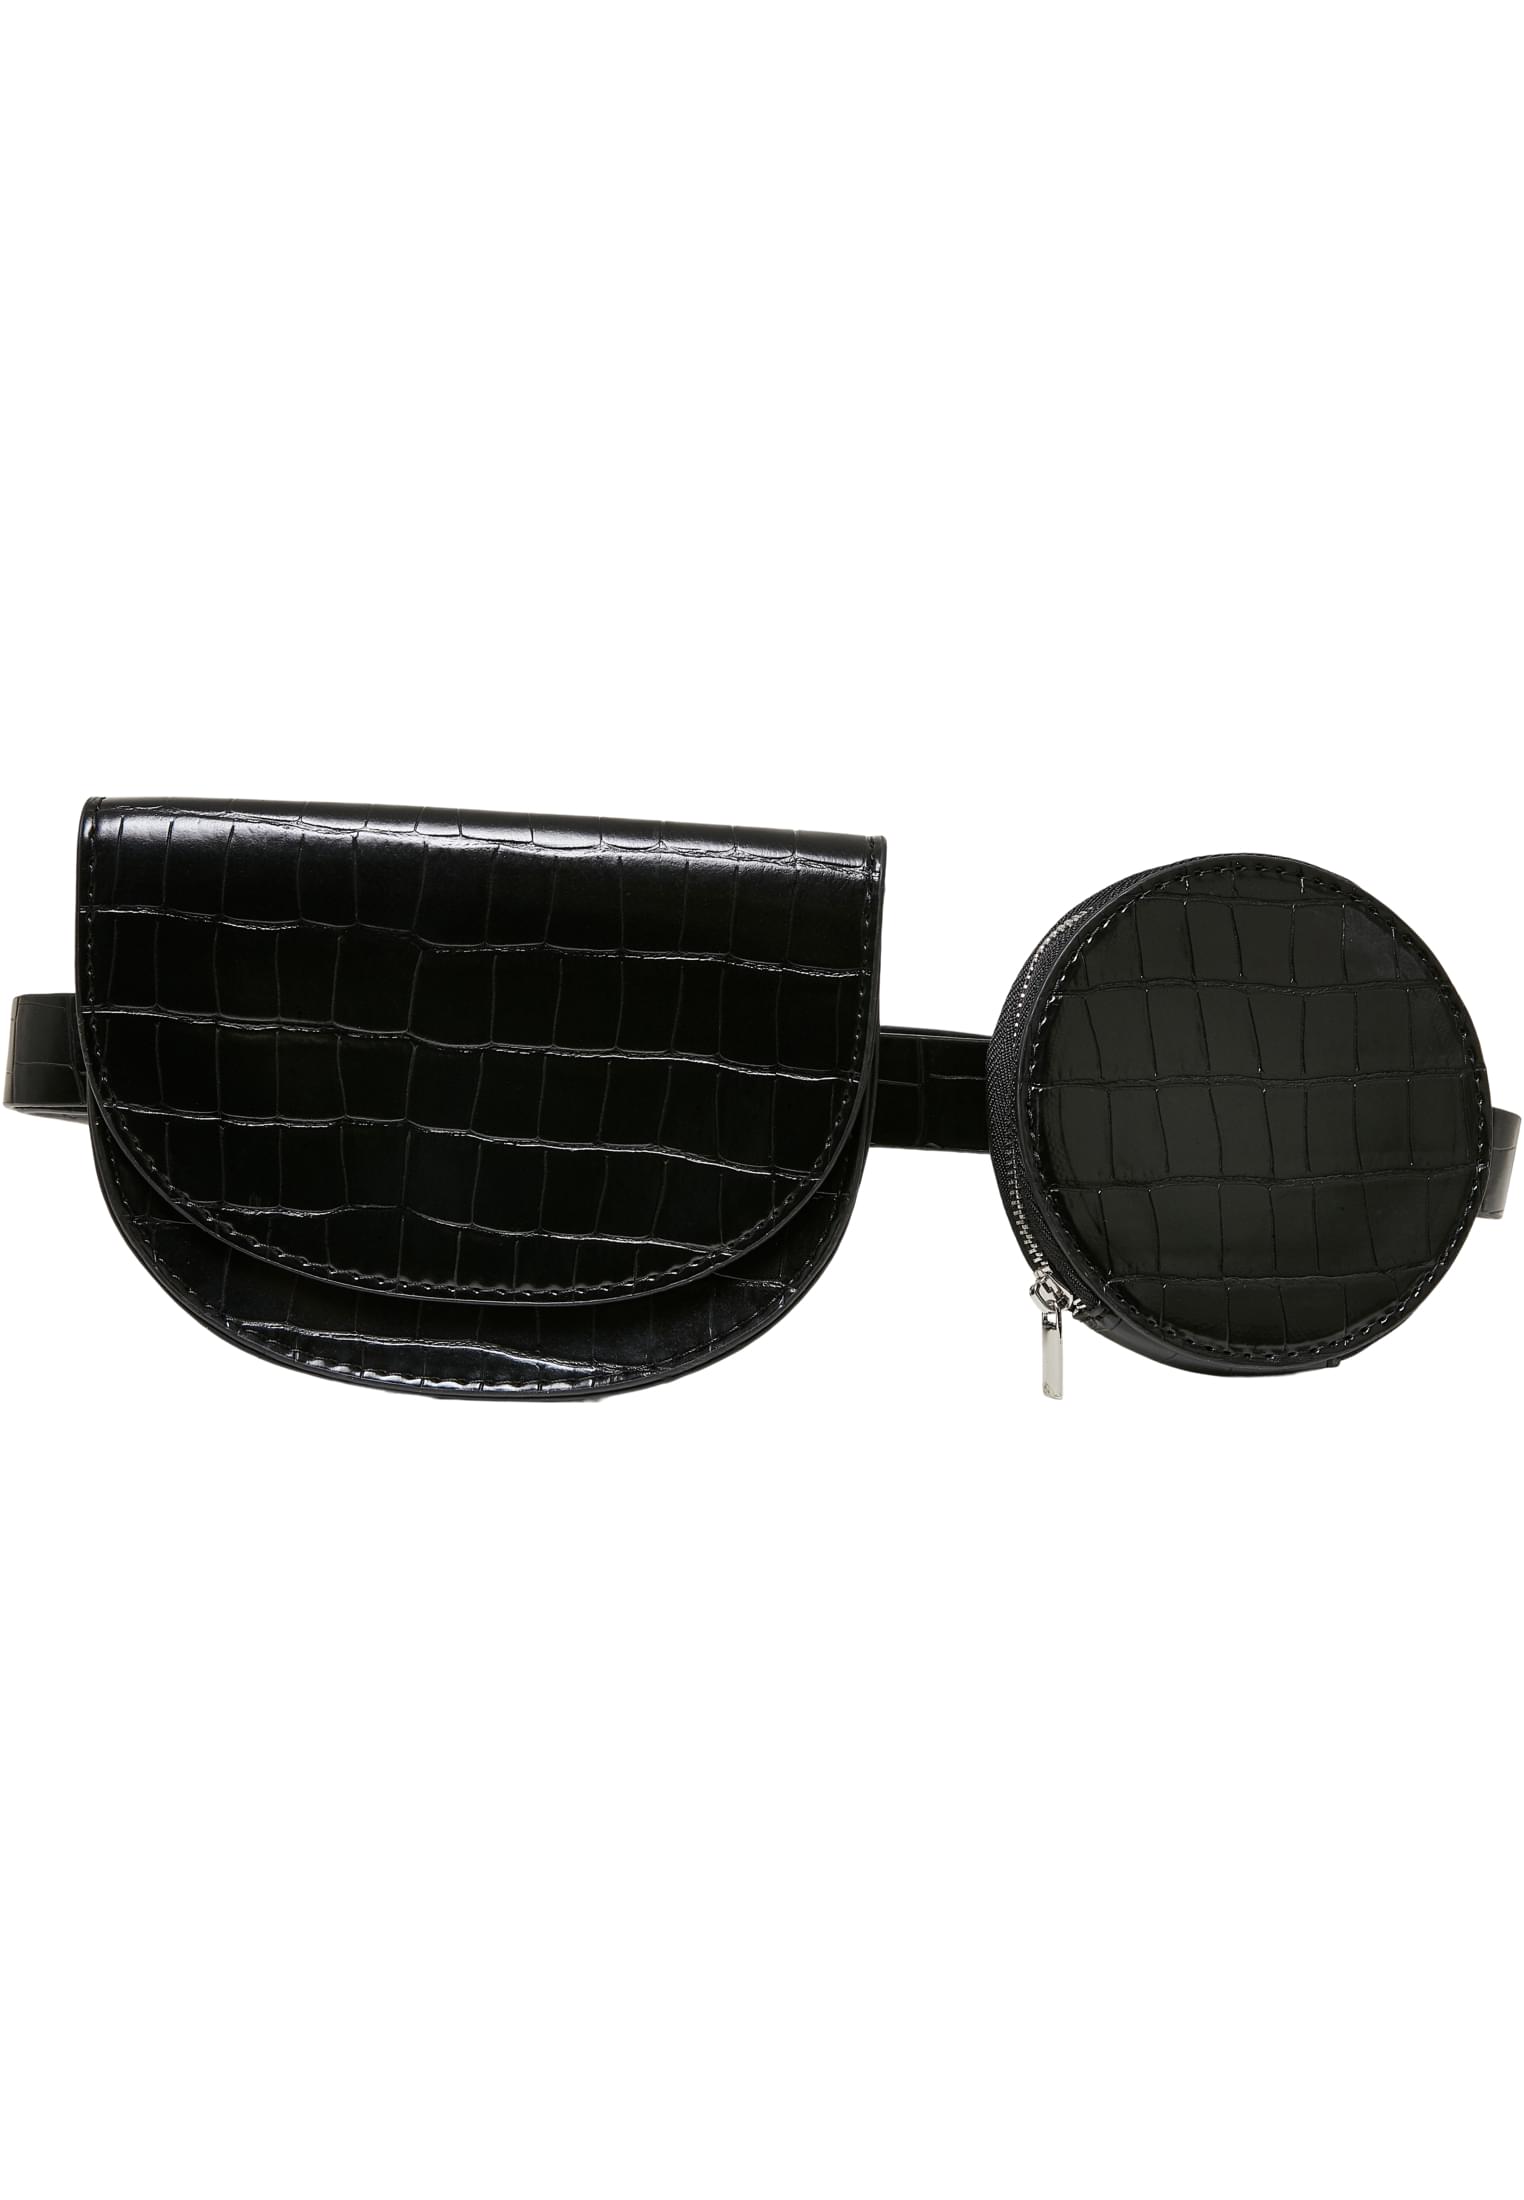 Double handbag made of Croco synthetic leather